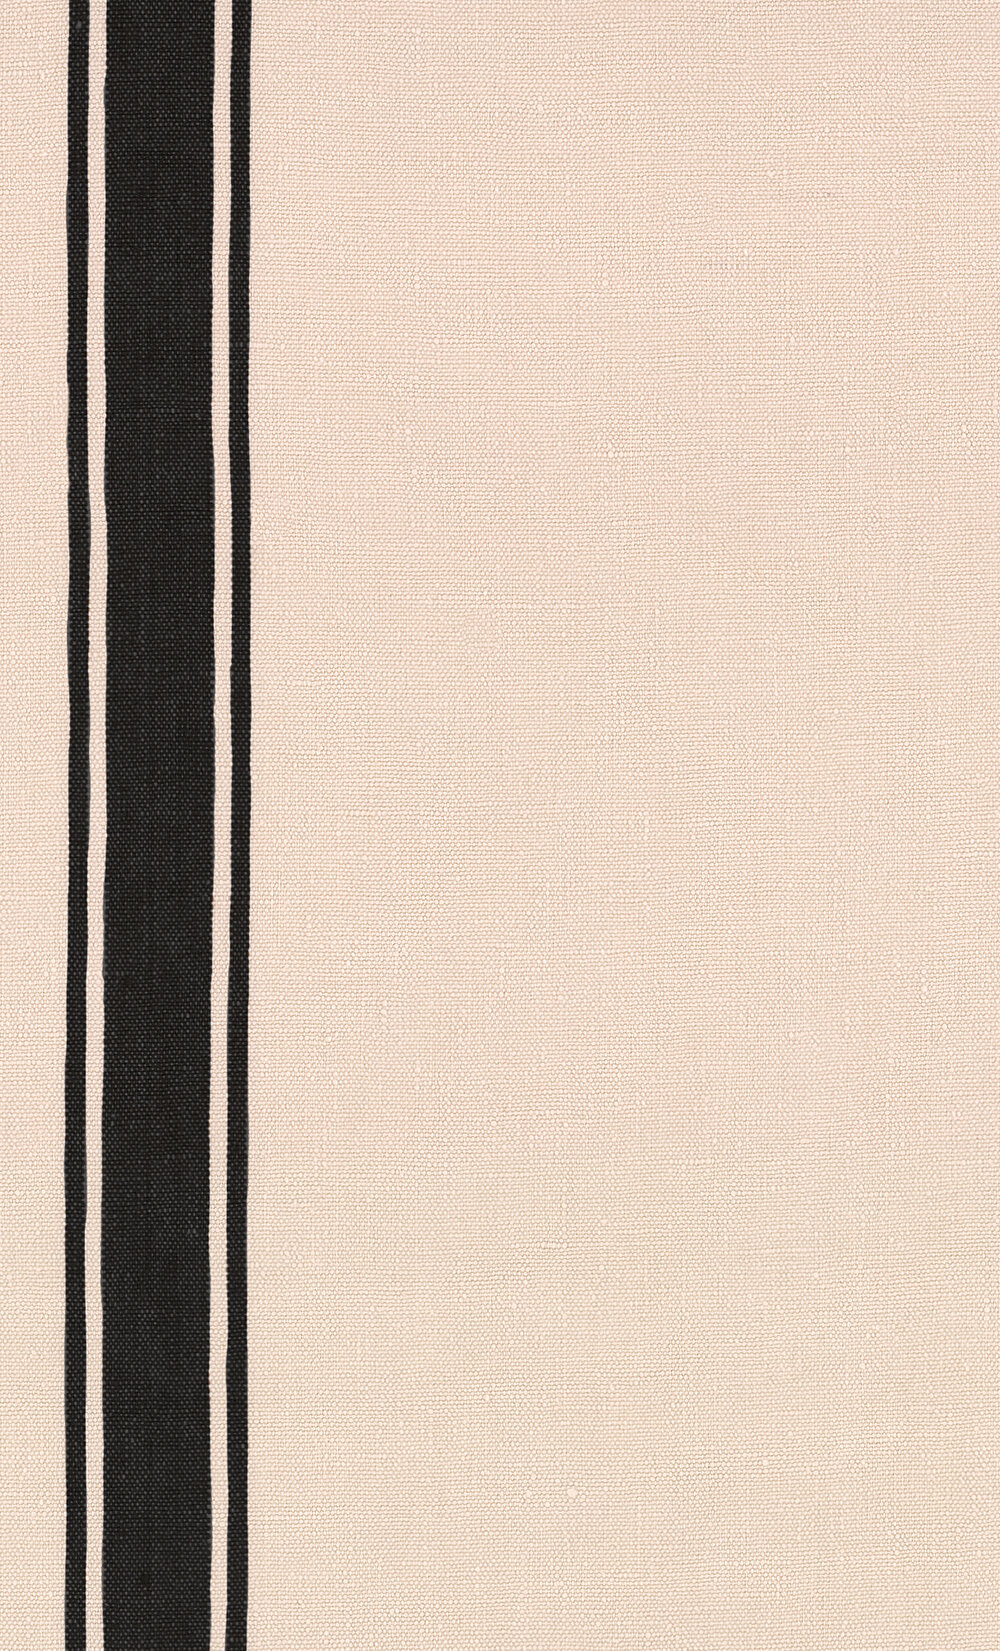 Hajdu Stripe Fabric - Black and White - by Mind the Gap